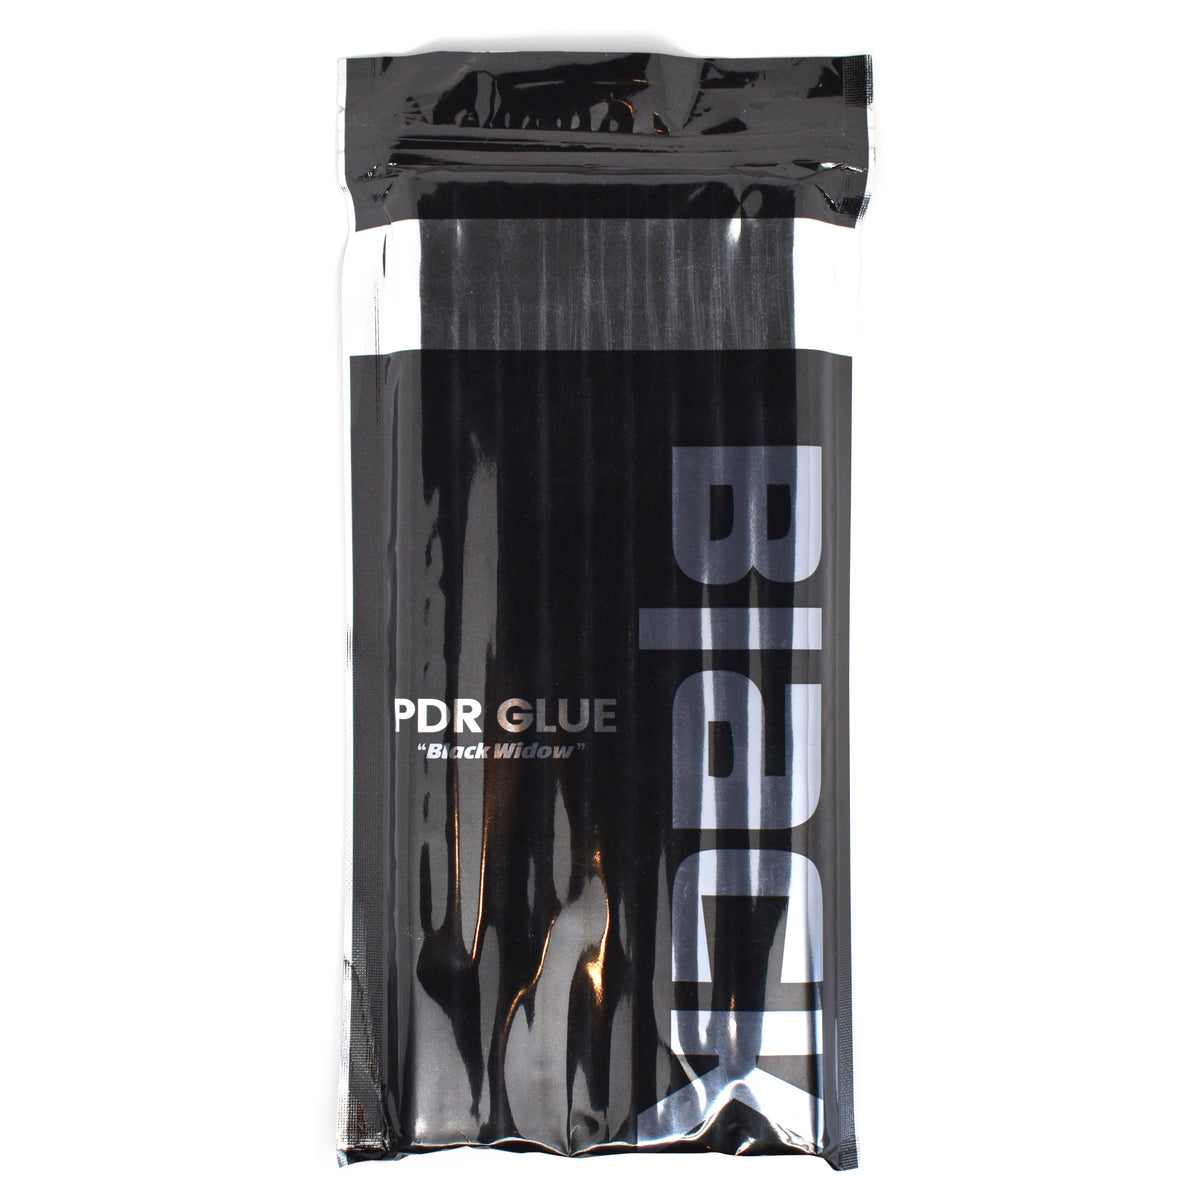 B-GPT-05-BGS - PDR Glue Sticks - Black